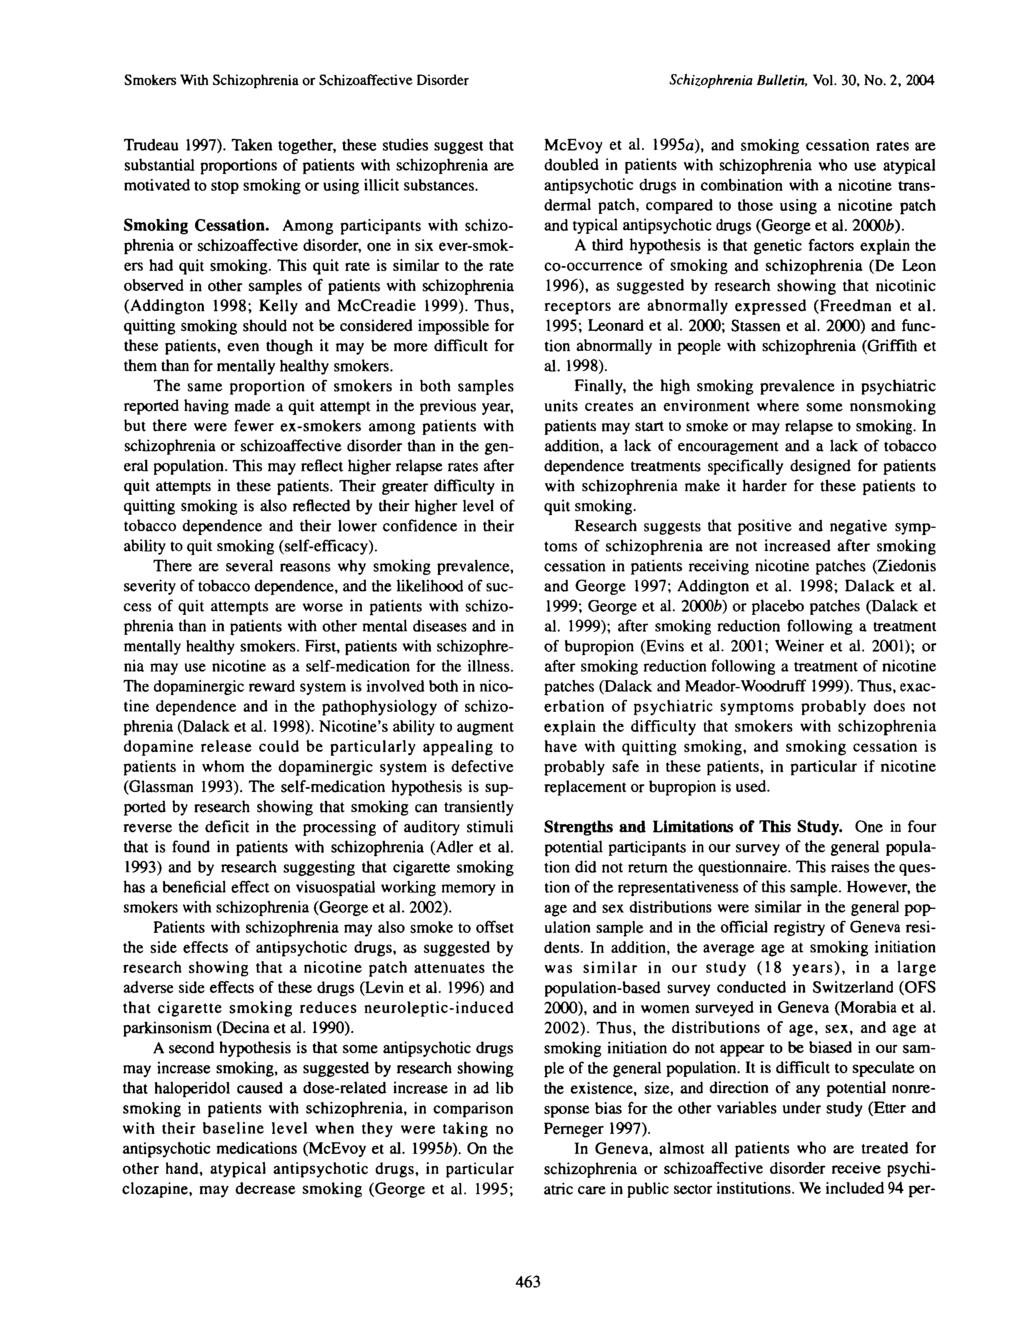 Smokers With Schizophrenia or Schizoaffective Disorder Schizophrenia Bulletin, Vol. 30, No. 2, 2004 Trudeau 1997).